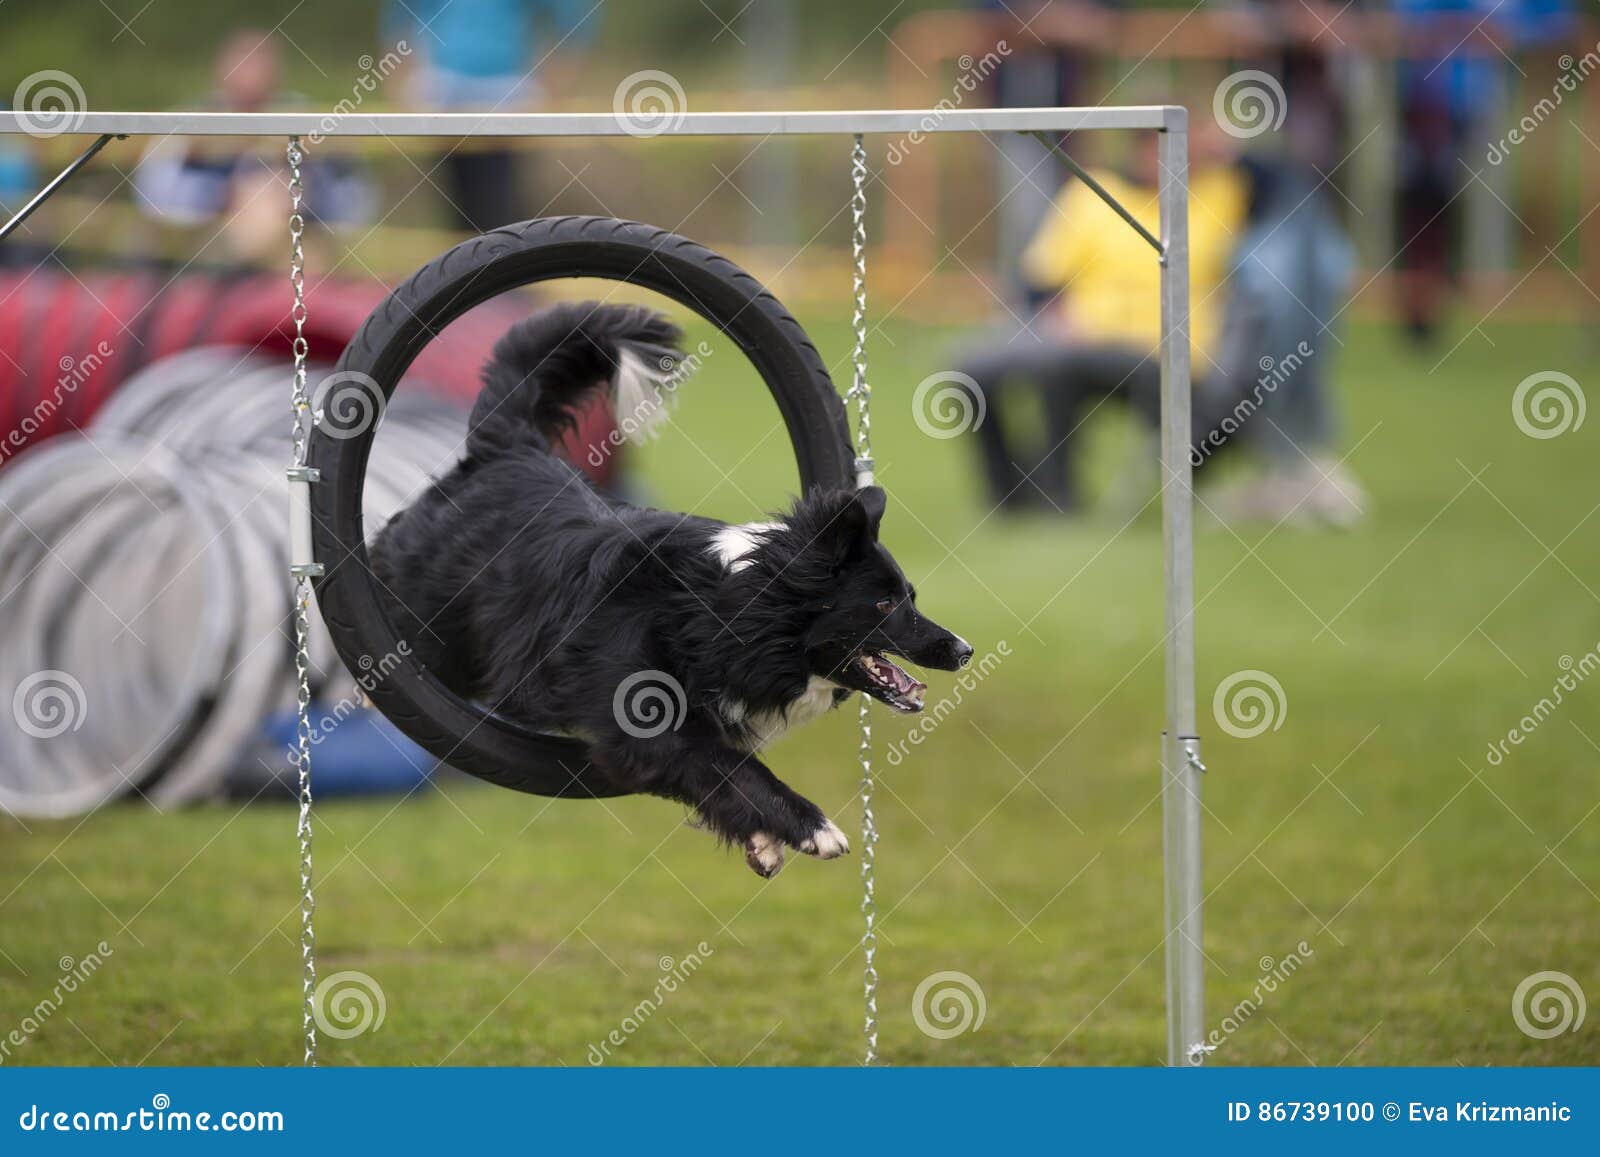 dog jumping through agility hoop